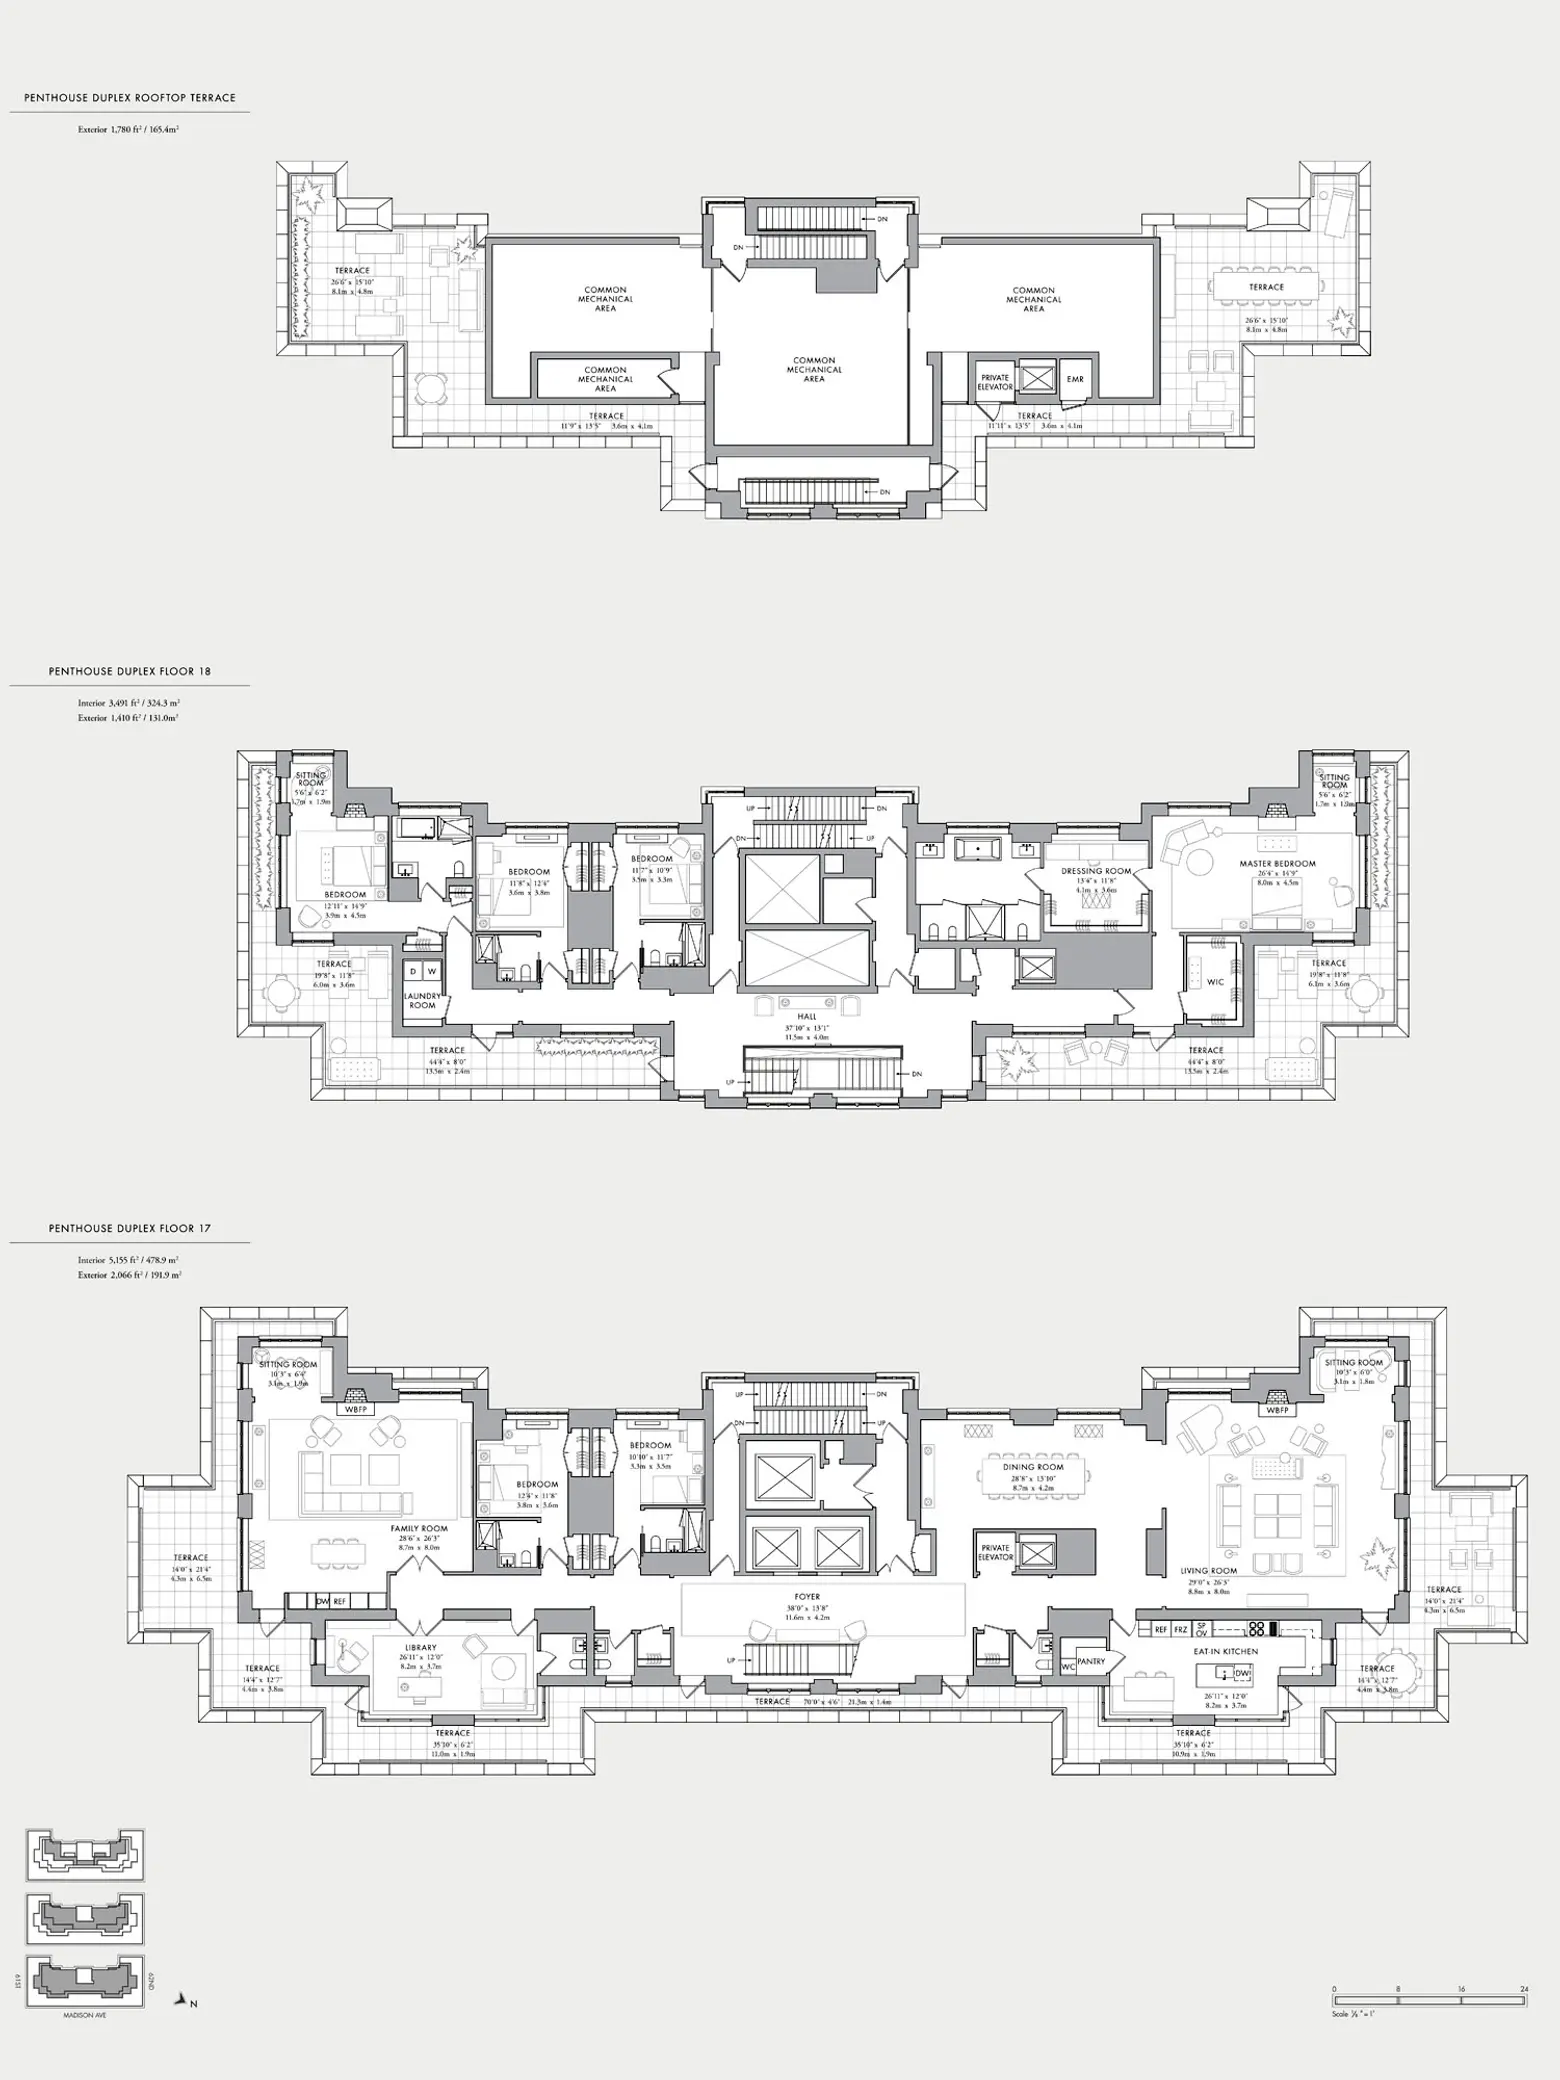 carlton house penthouse floorplan